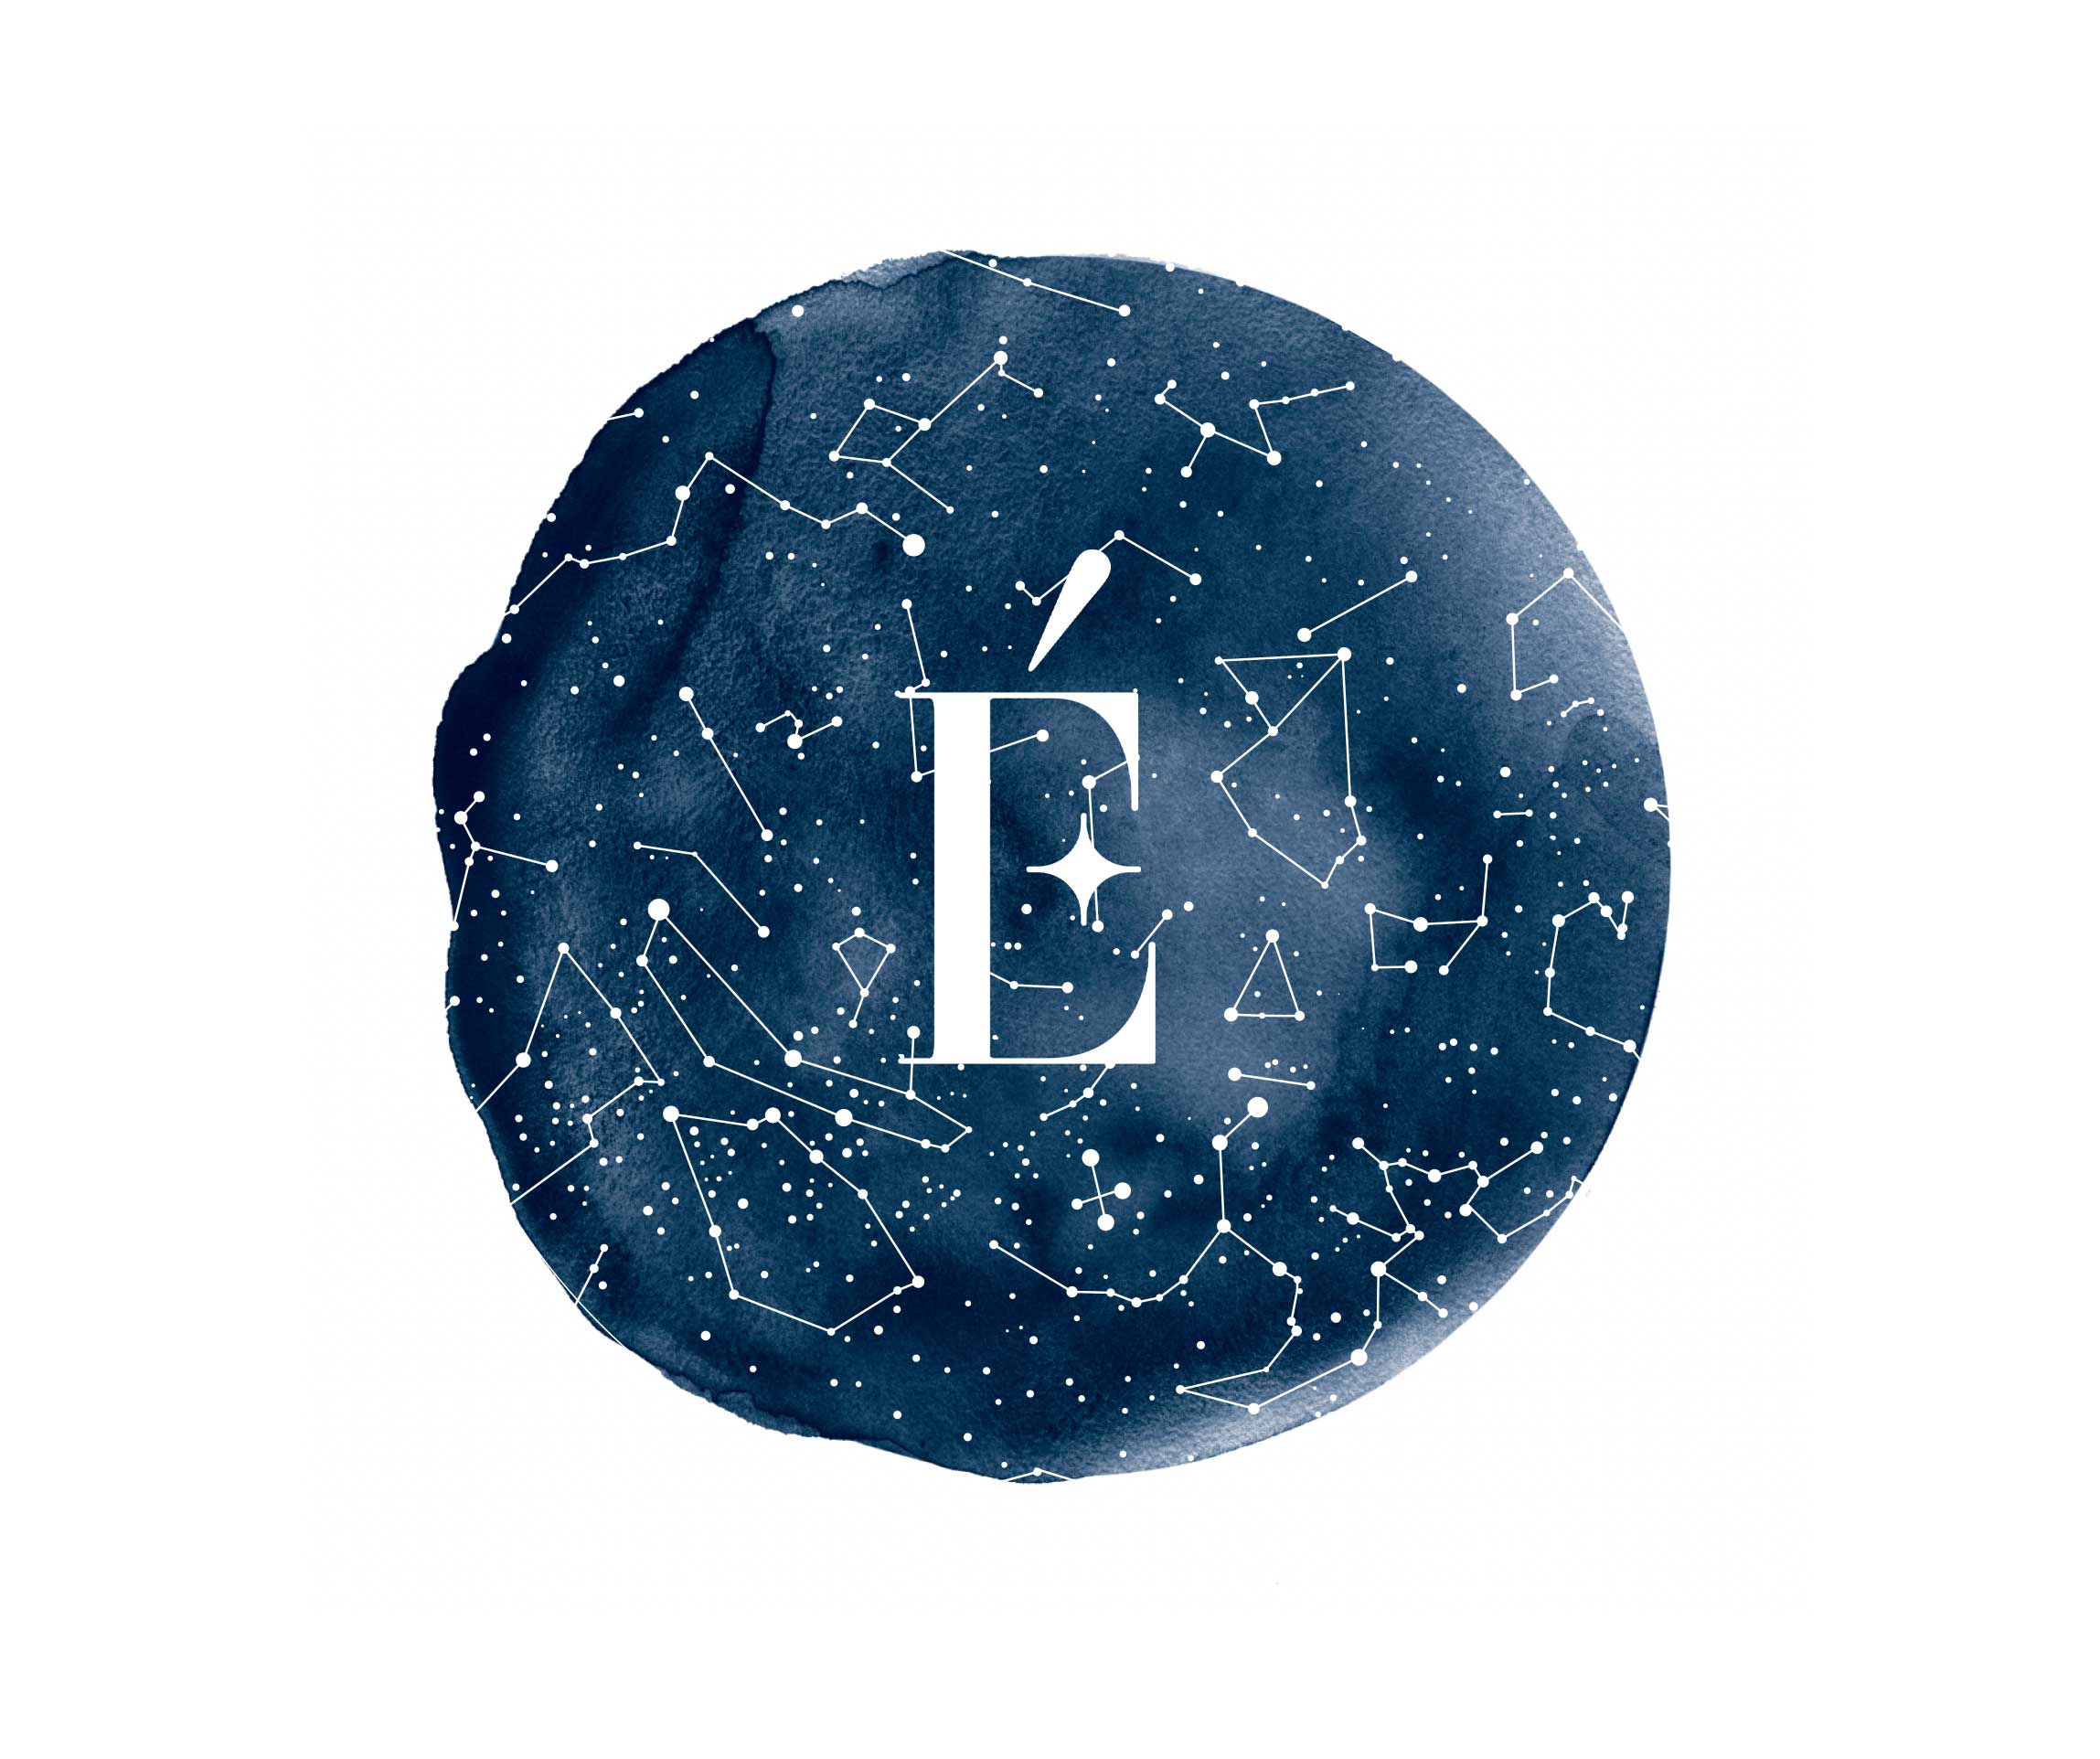 Émigré Wine and constellations